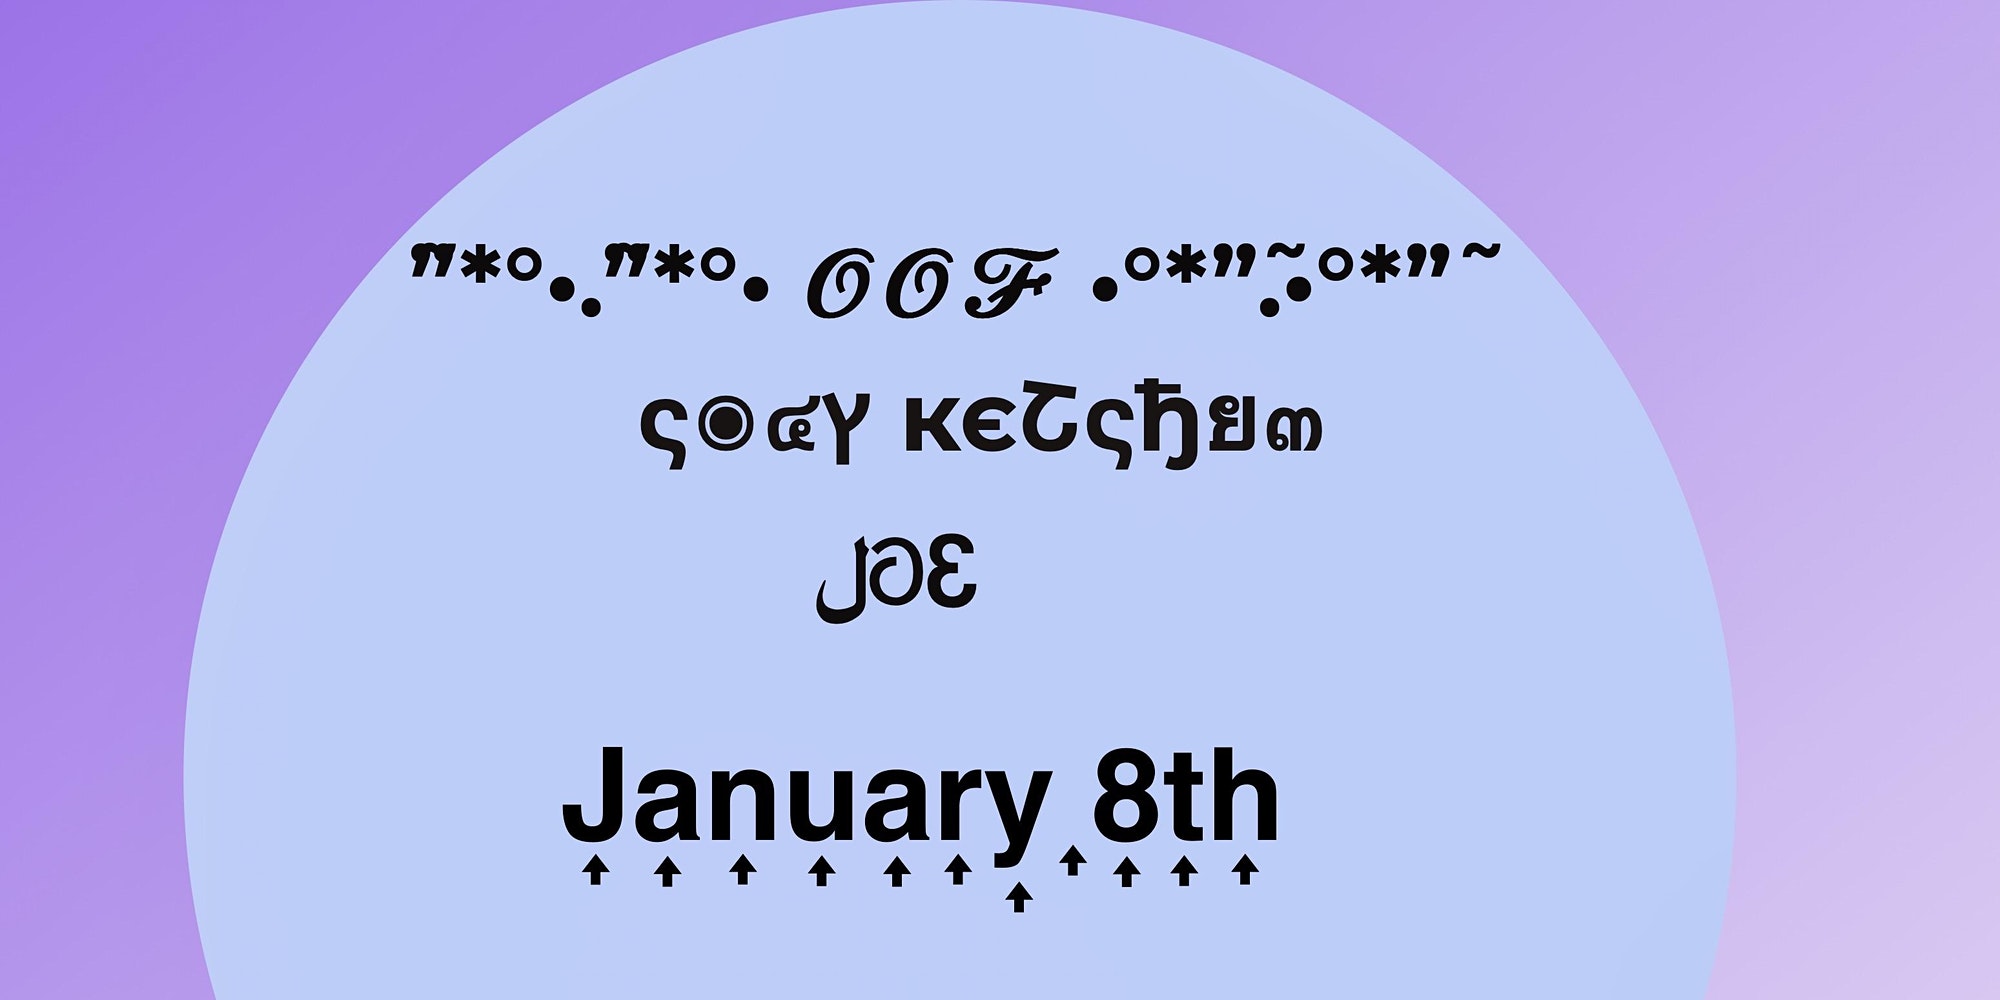 Lavender circle on a purple background - OOF, Cody Ketchum, JOE - January 8th